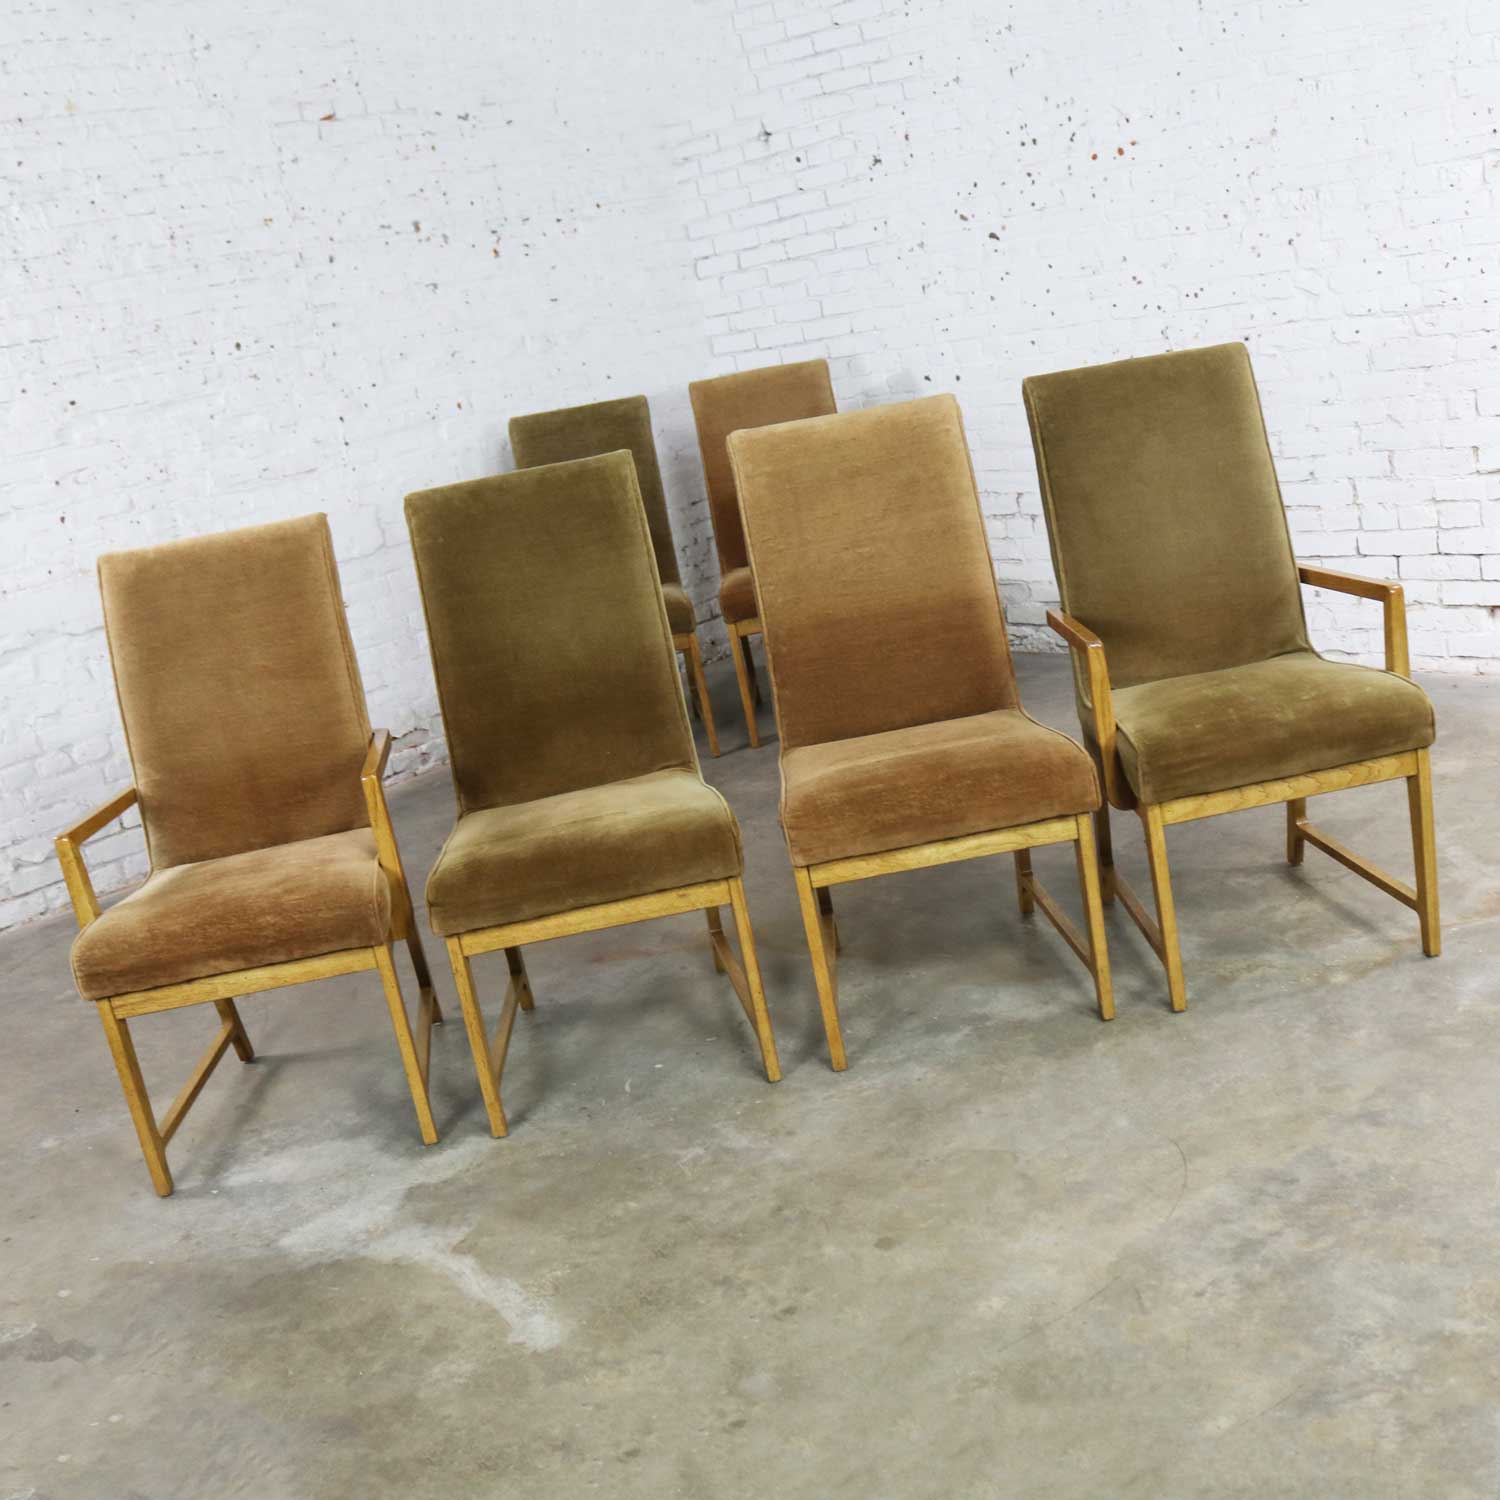 6 Modern Style Vintage Dining Chairs Velvet Scoop Seats Bernhardt Flair for Hibriten